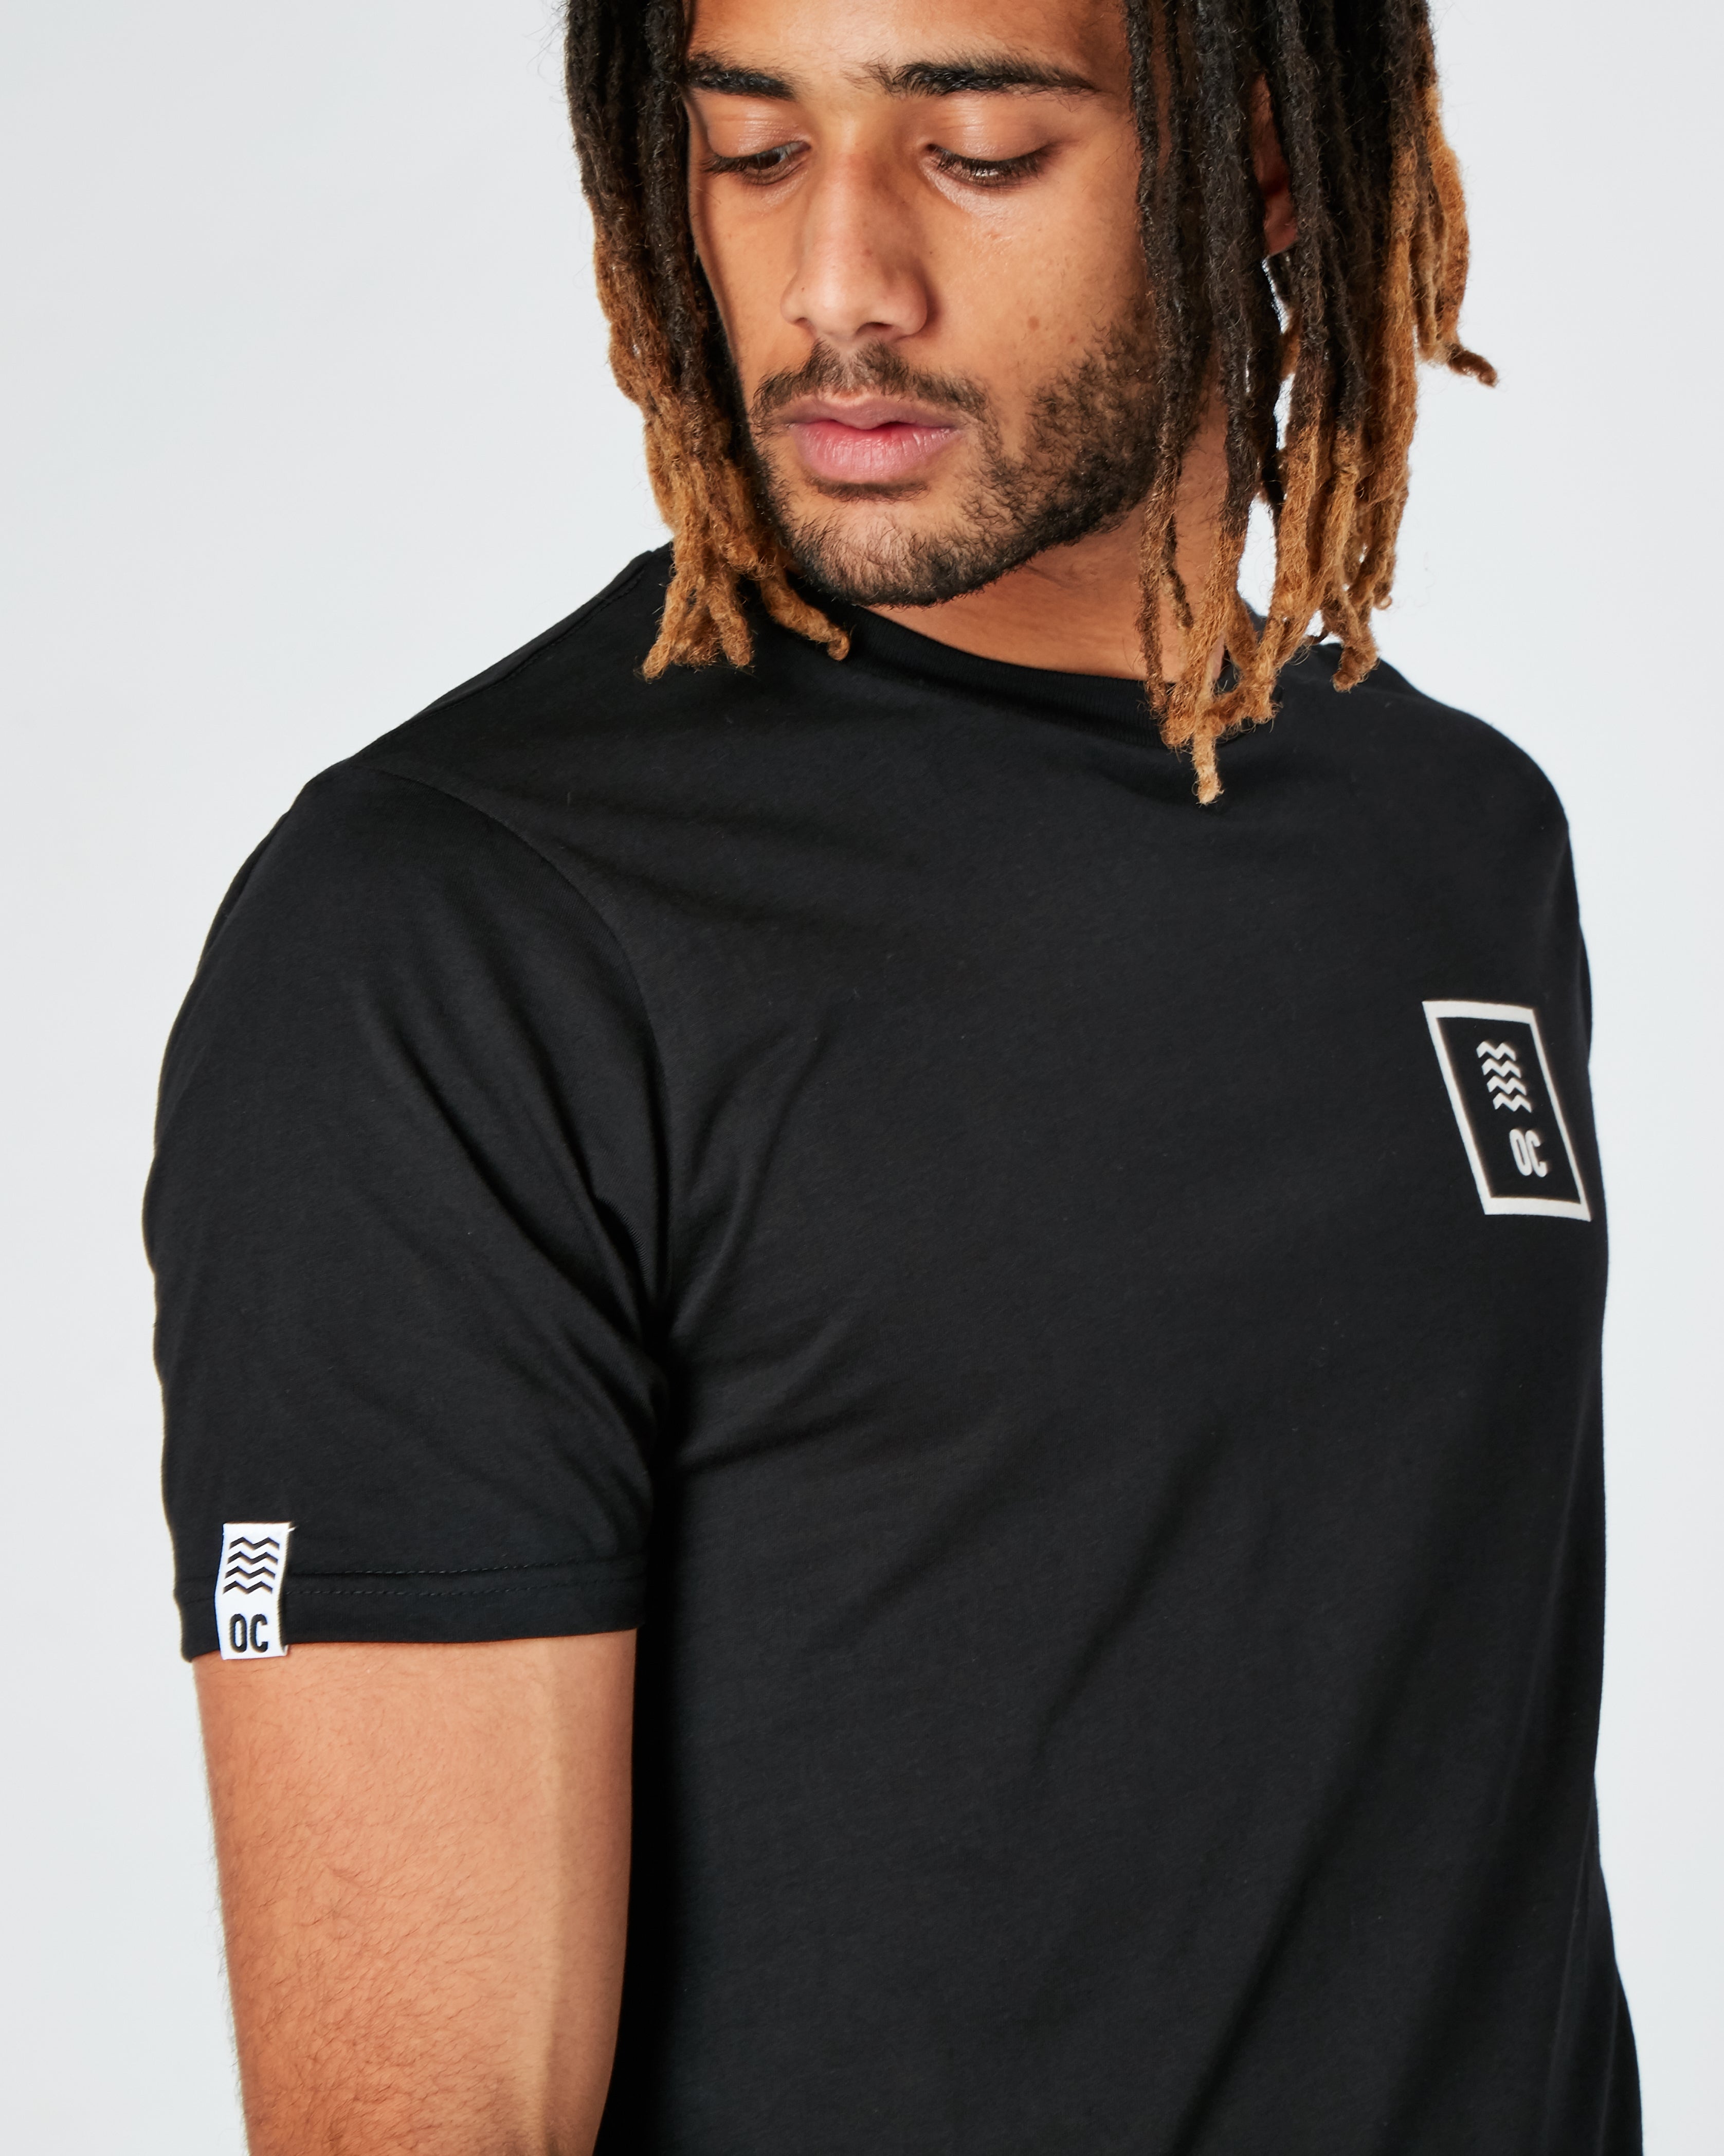 OC Box Logo T Shirt Black